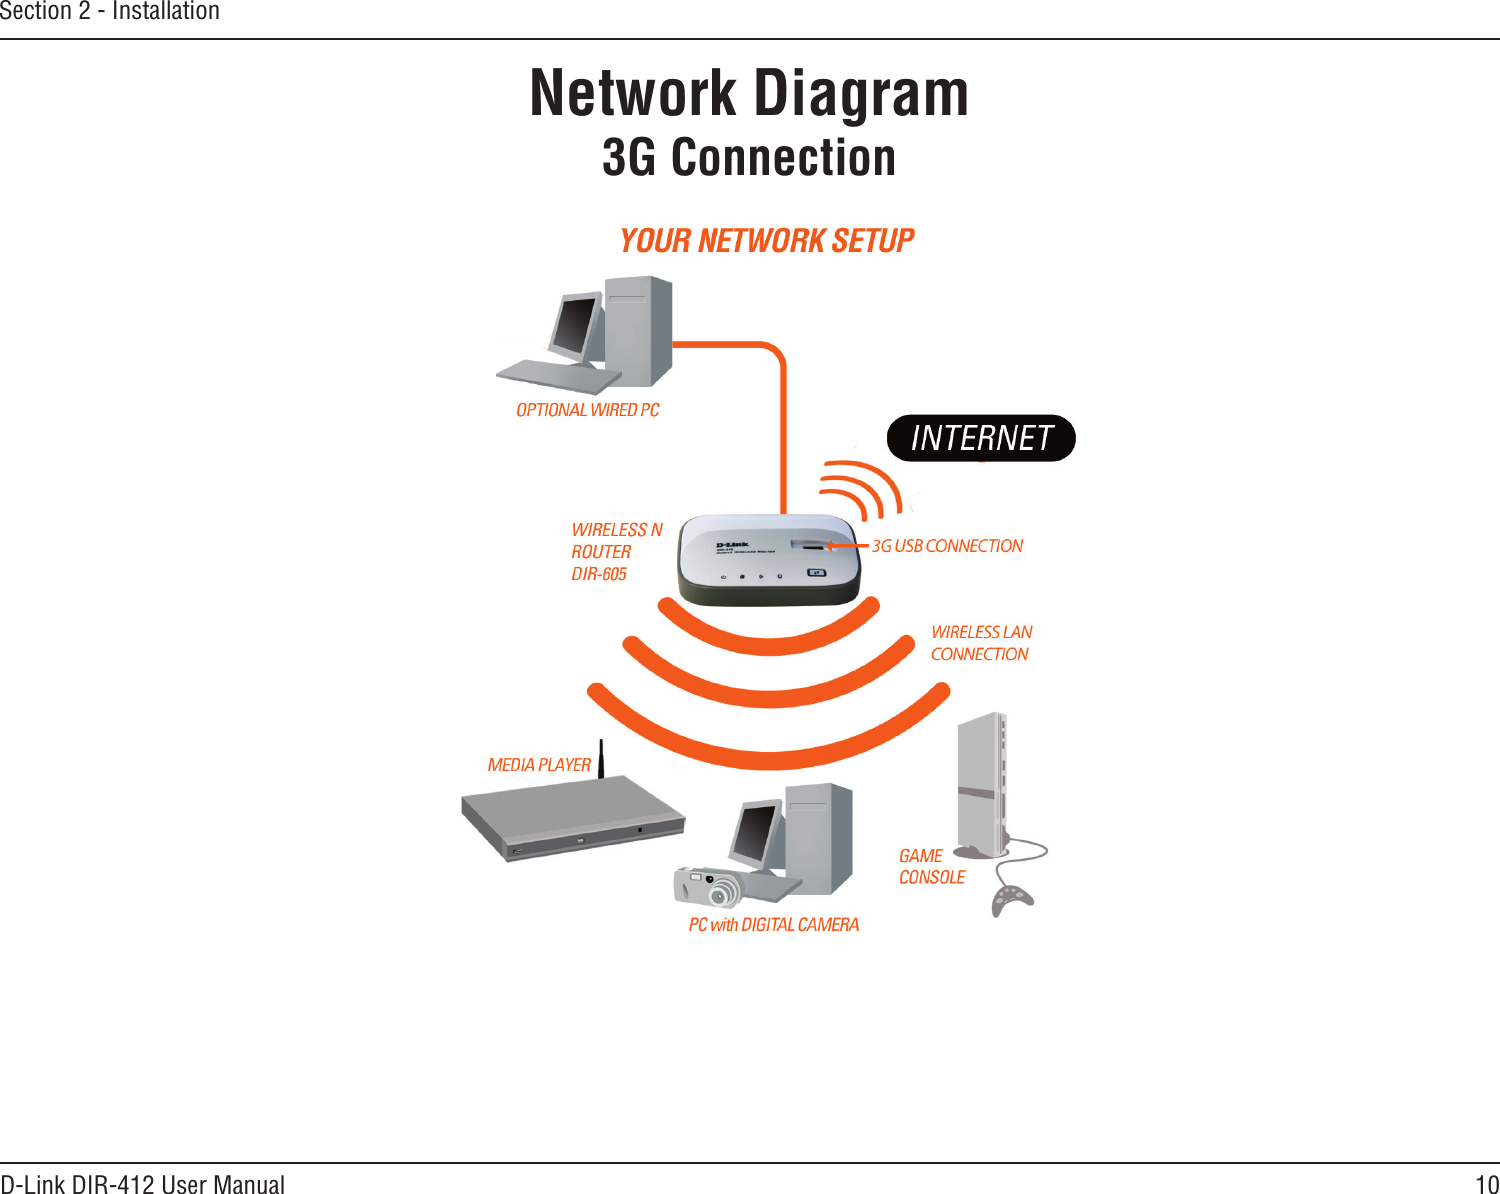 10D-Link DIR-412 User ManualSection 2 - InstallationNetwork Diagram 3G Connection